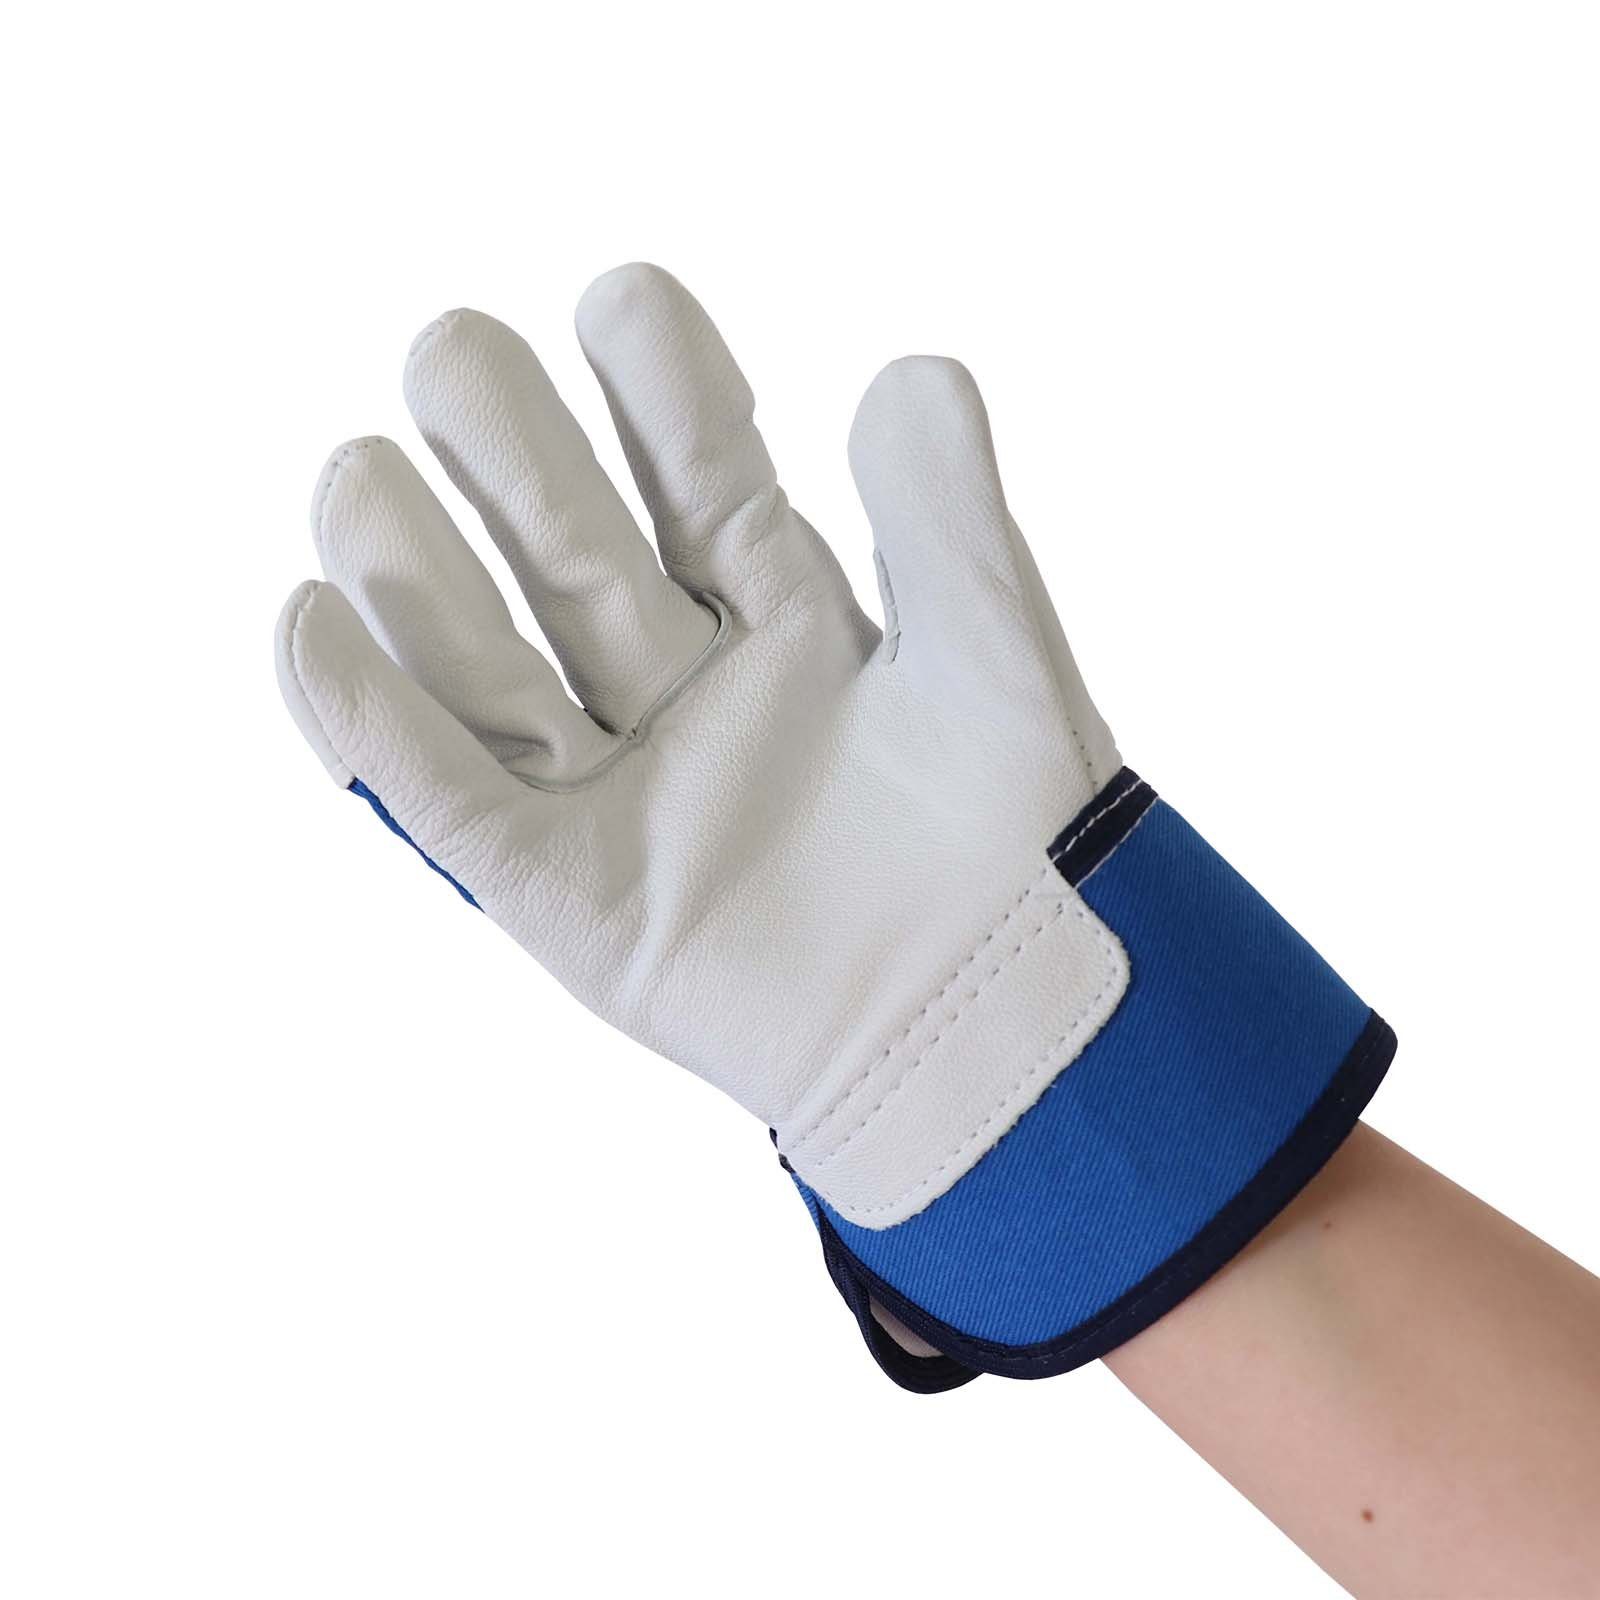 Kinderhandschuhe Leder-Arbeitshandschuhe Handschuhe tprosafe premium kleine blau-grau - tprosafe kids